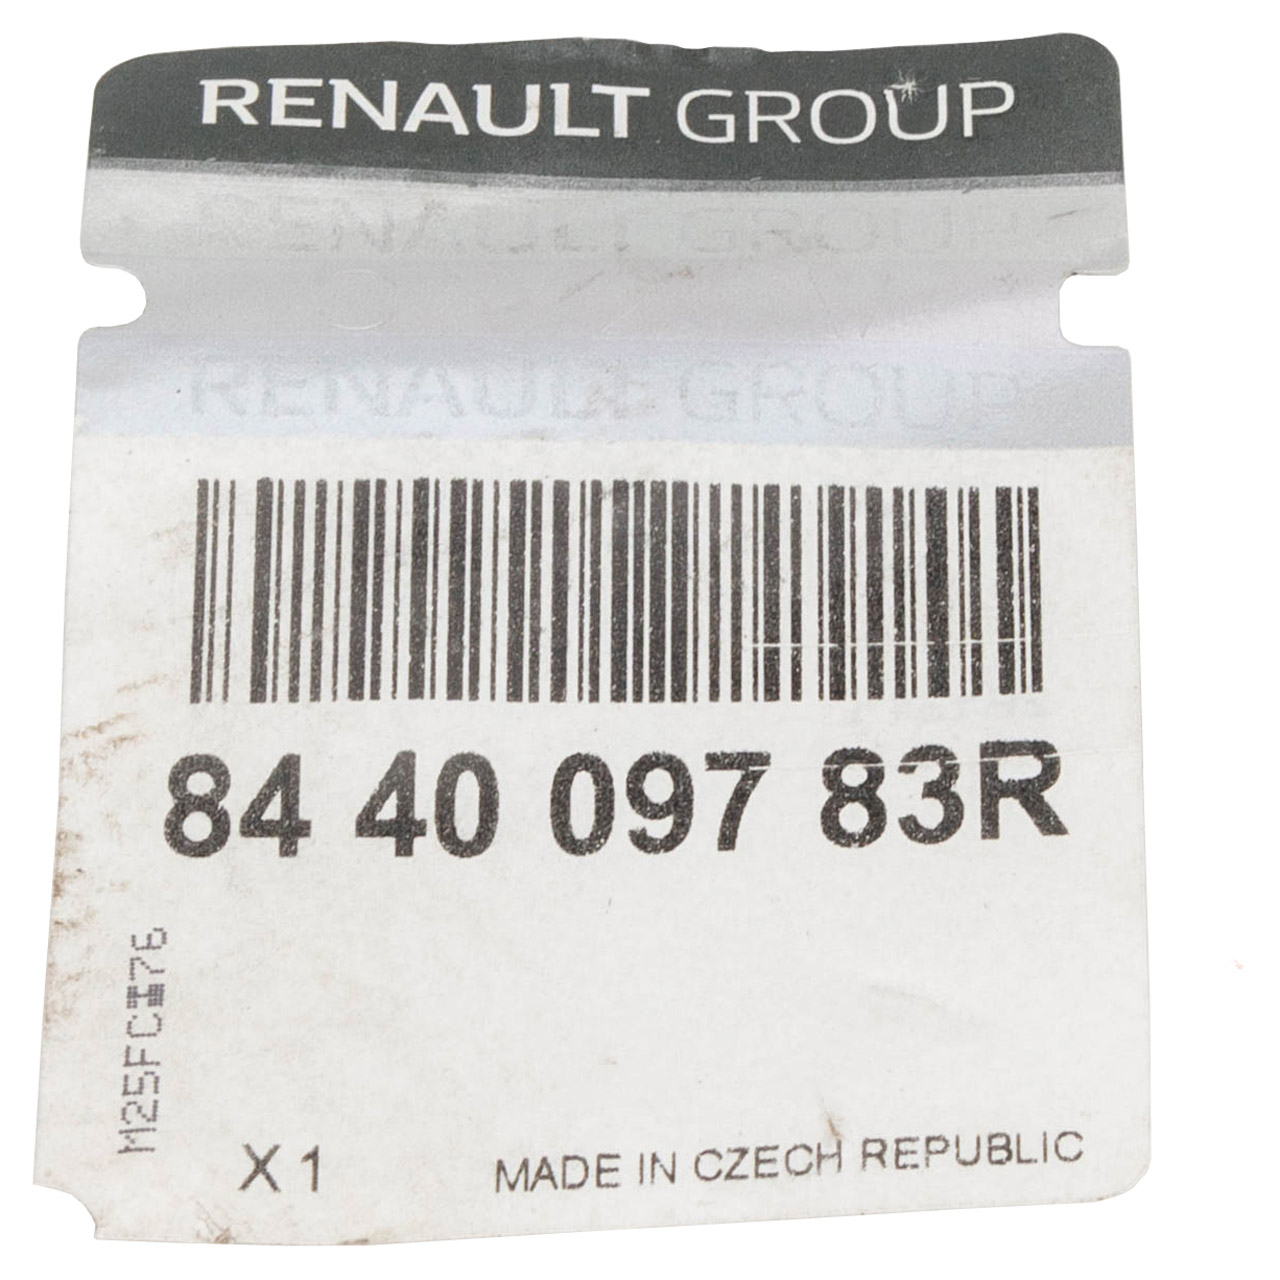 ORIGINAL Renault Türscharnier Master 3 mit Hecktür 270 Grad hinten 844009783R